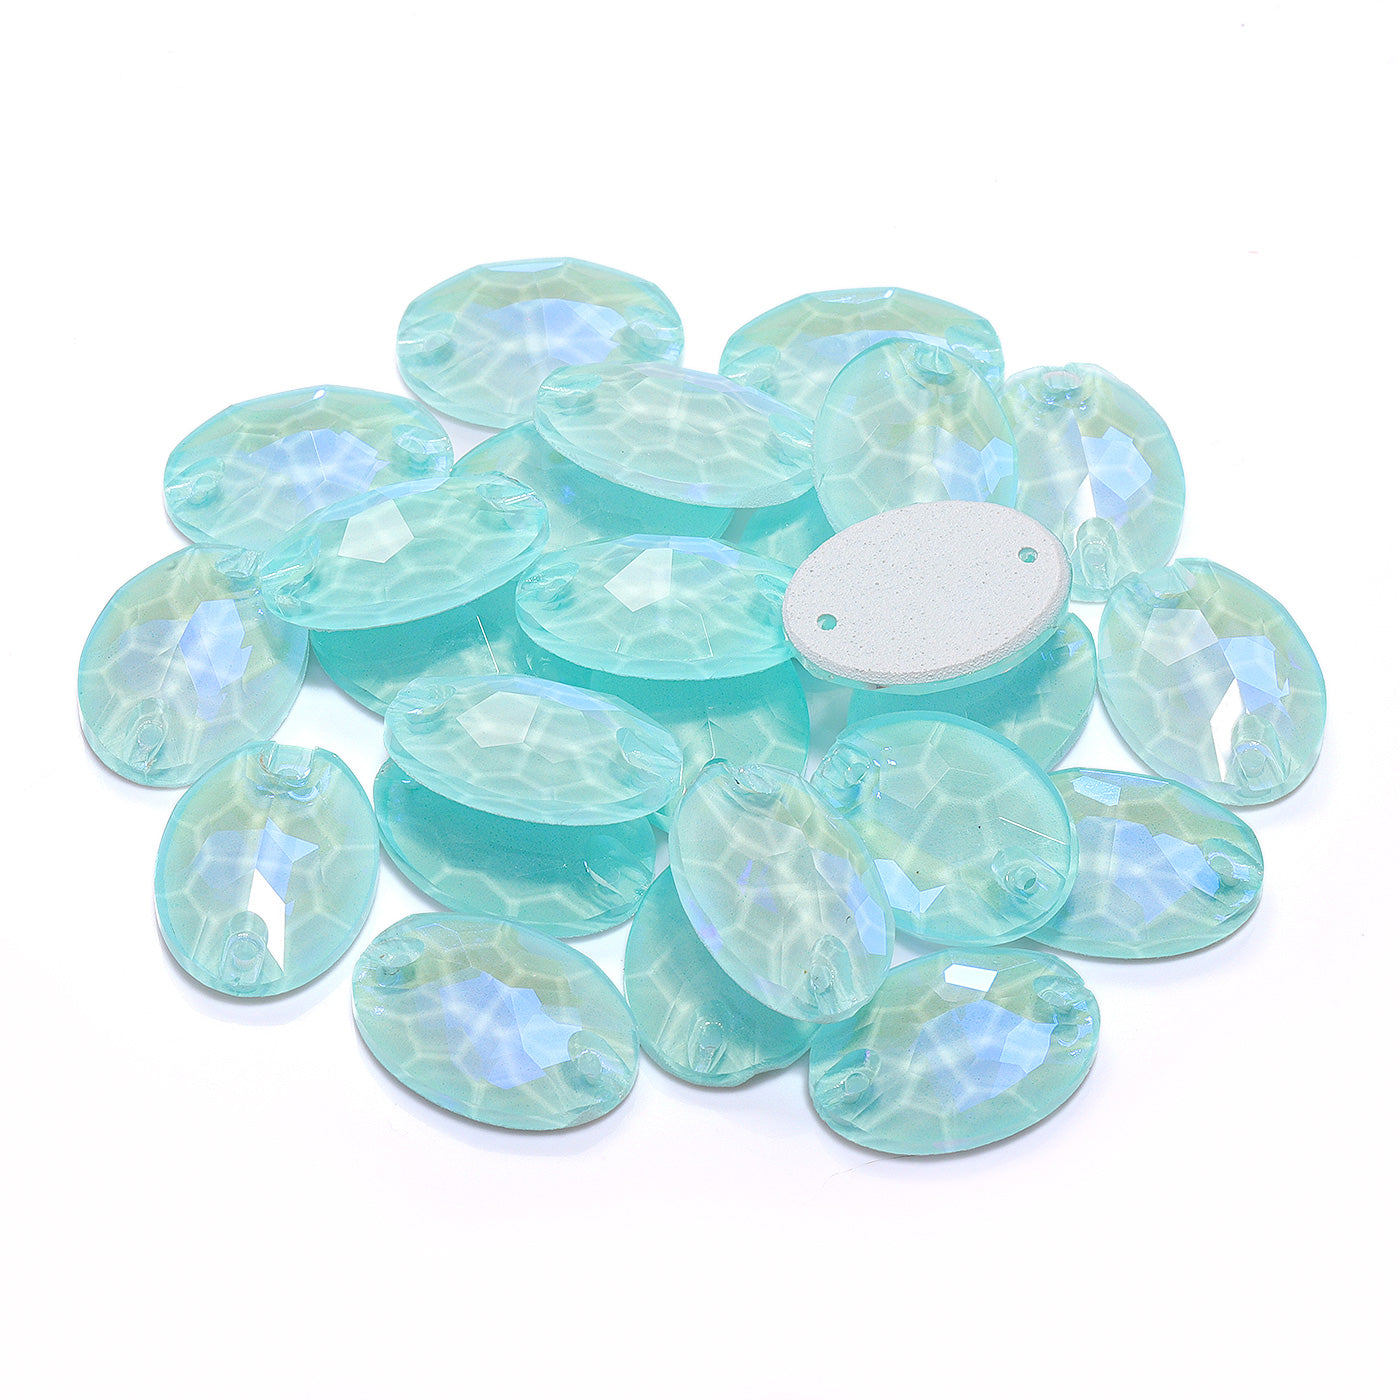 Electric Neon Light Azore Oval Shape High Quality Glass Sew-on Rhinestones